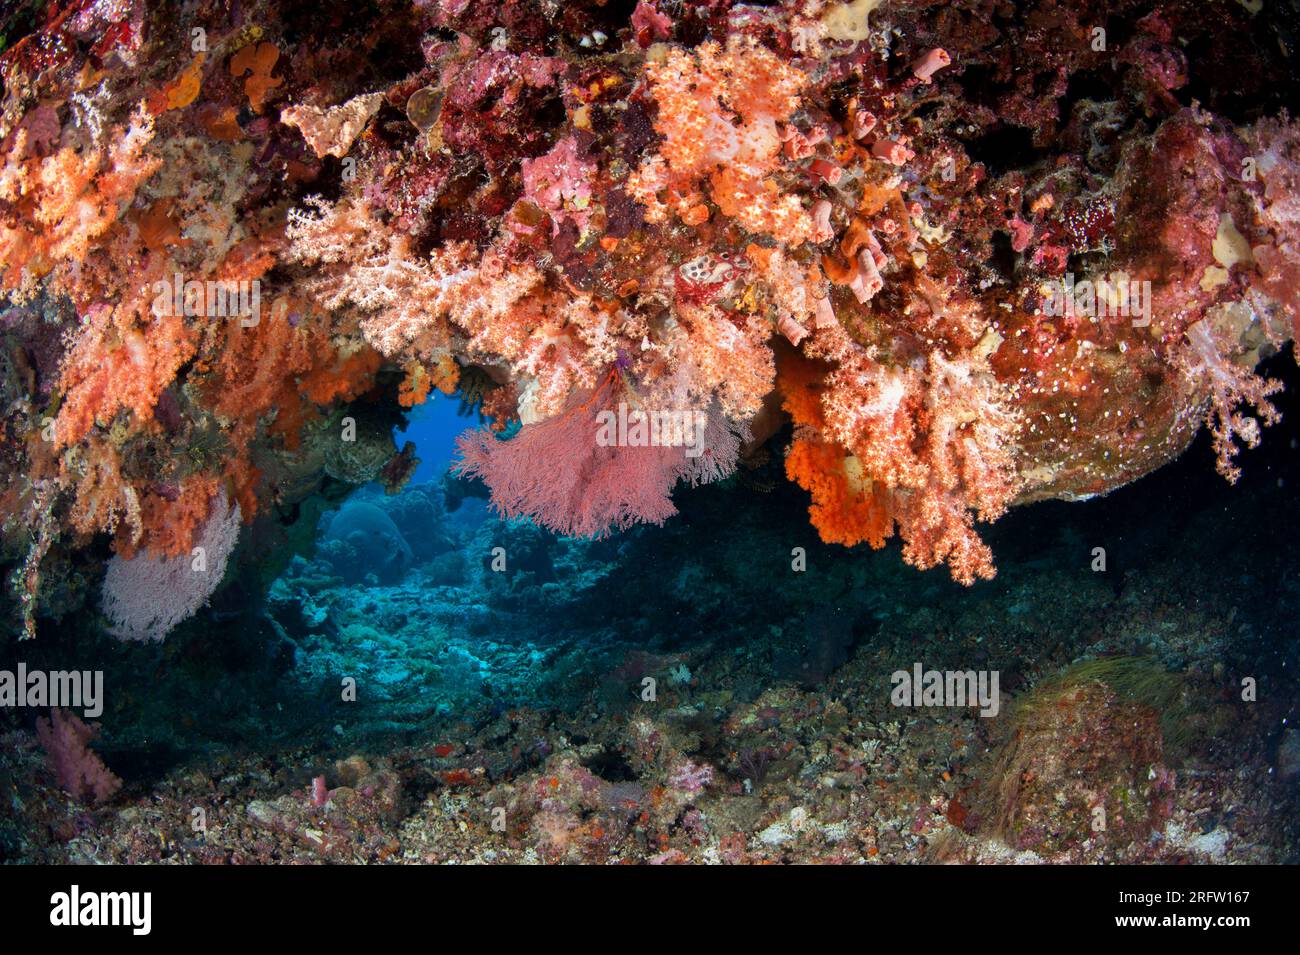 Divaricate Tree Coral, Spongodes sp, by swim-through entrance, Beacon Wall dive site, Nyata Island, near Alor, Indonesia Stock Photo